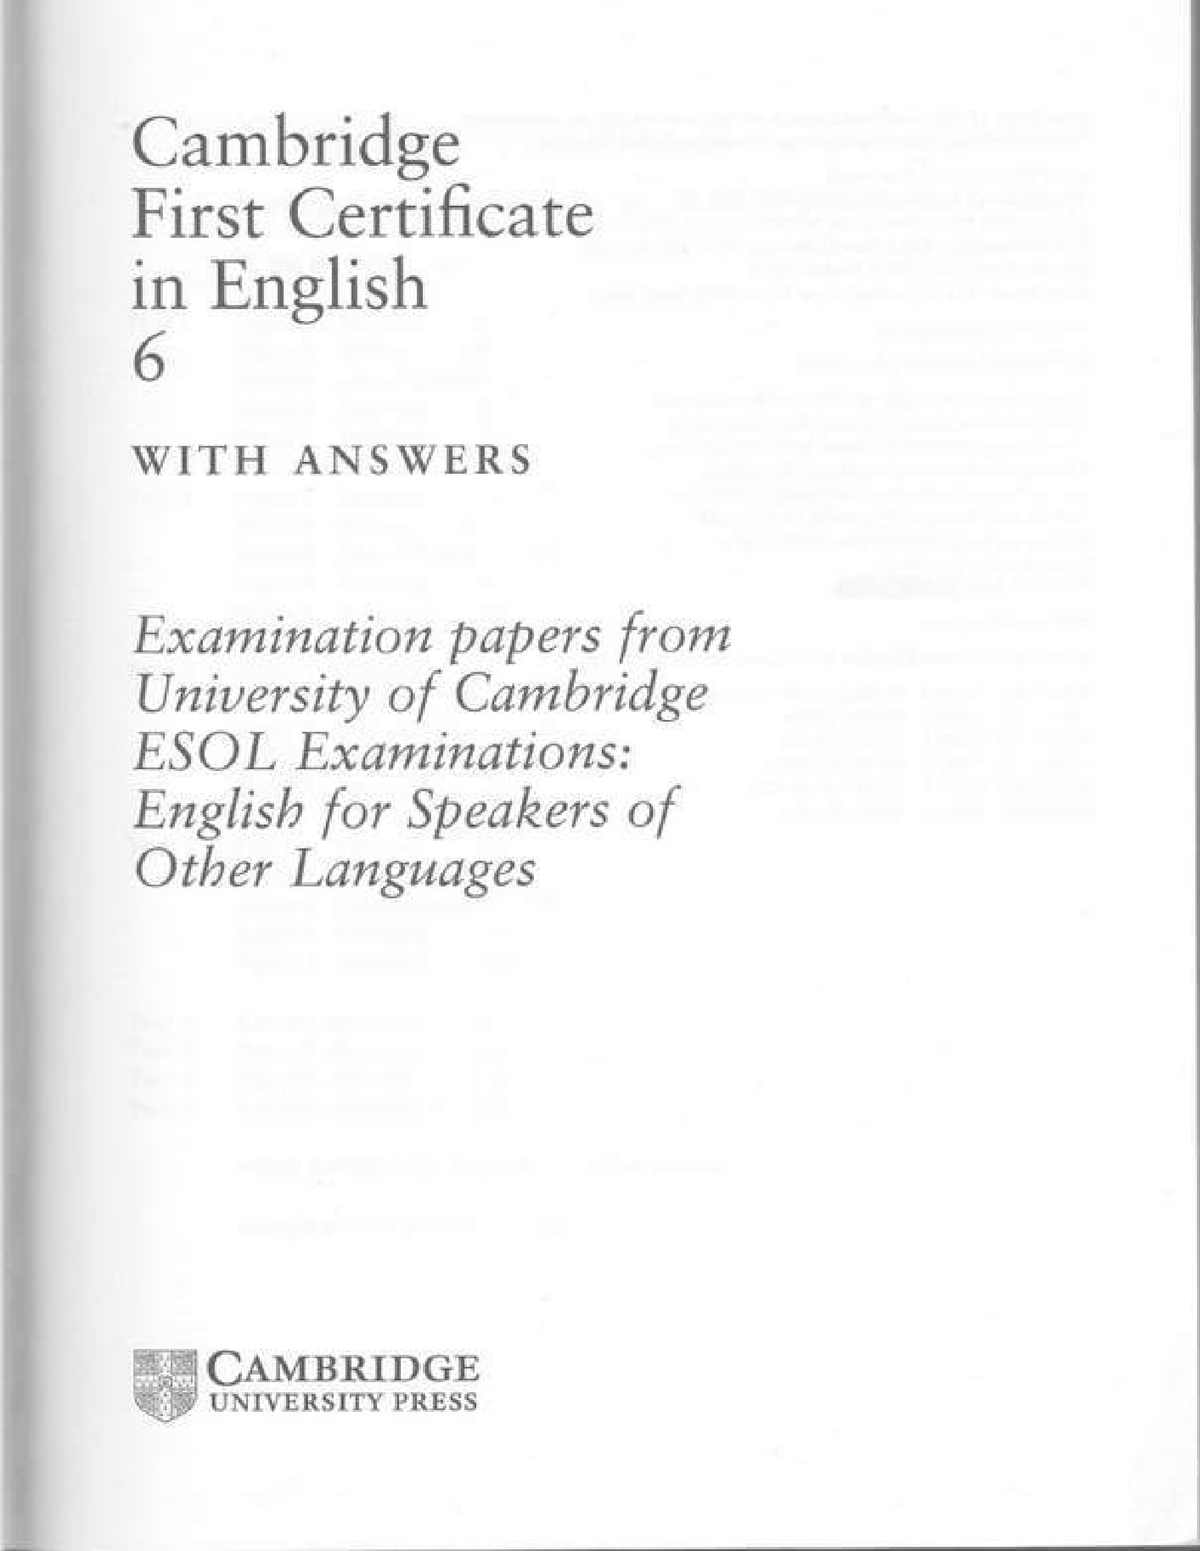 Cambridge papers FCE 6 - english book - Business English - Studocu